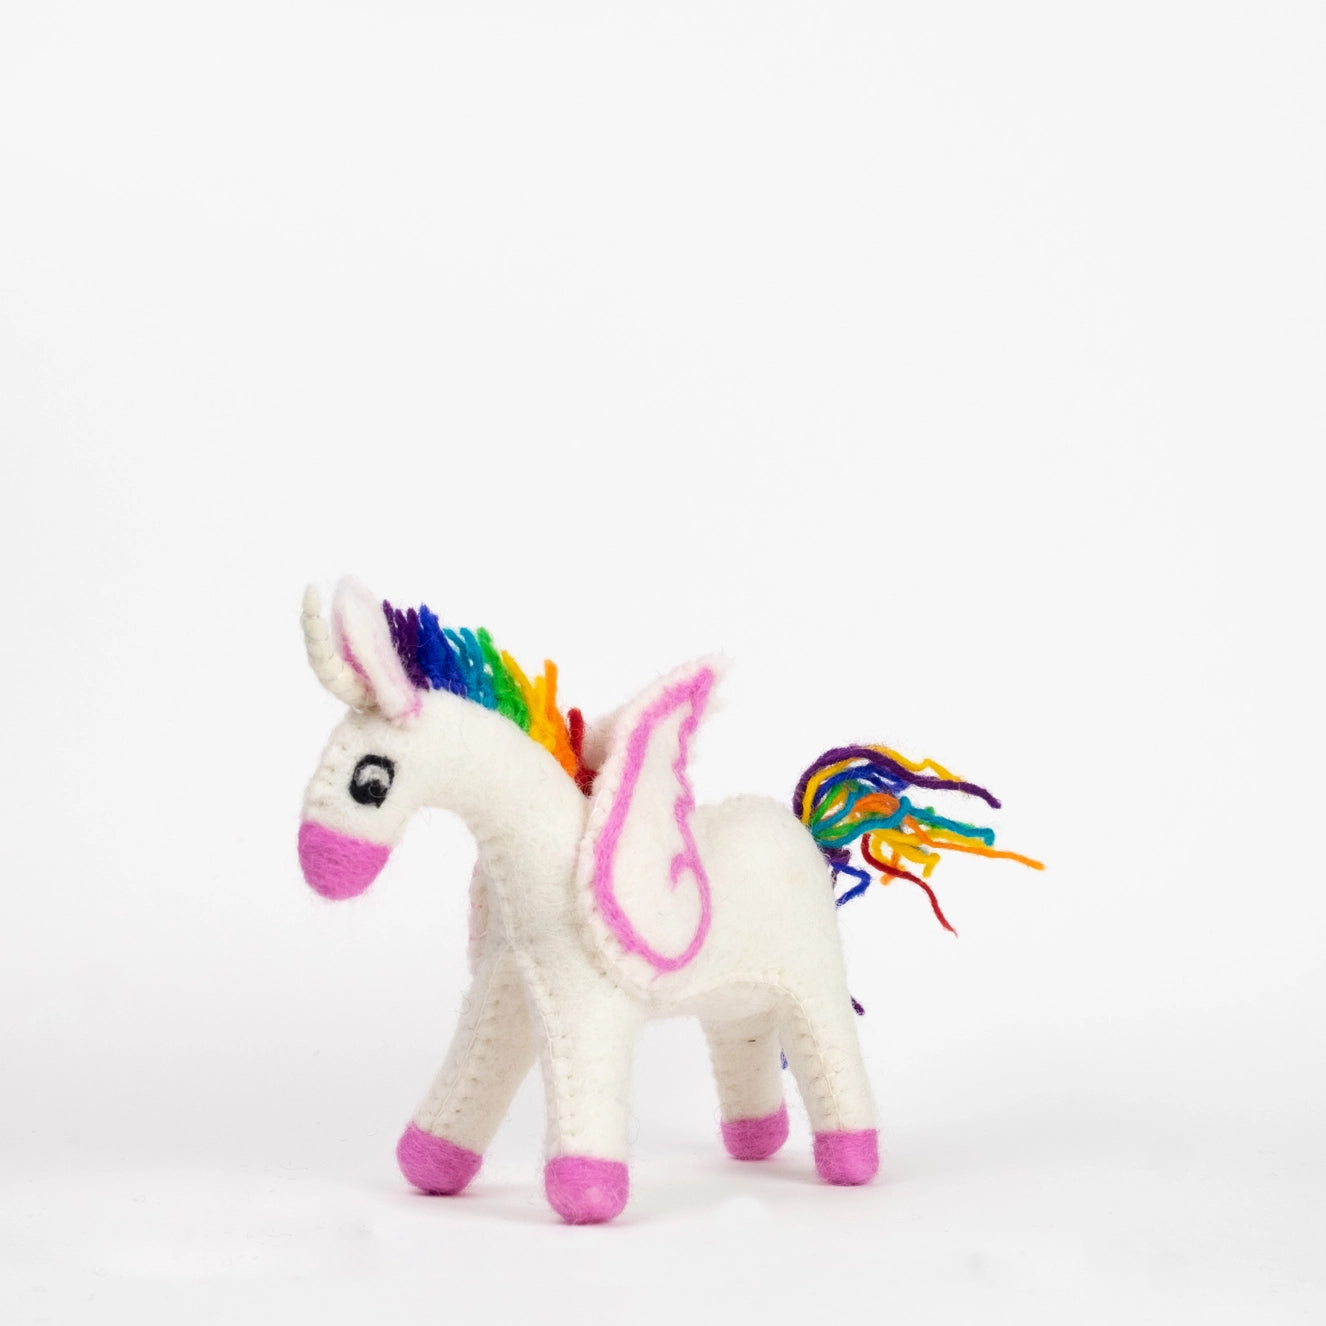 Felt rainbow unicorn small